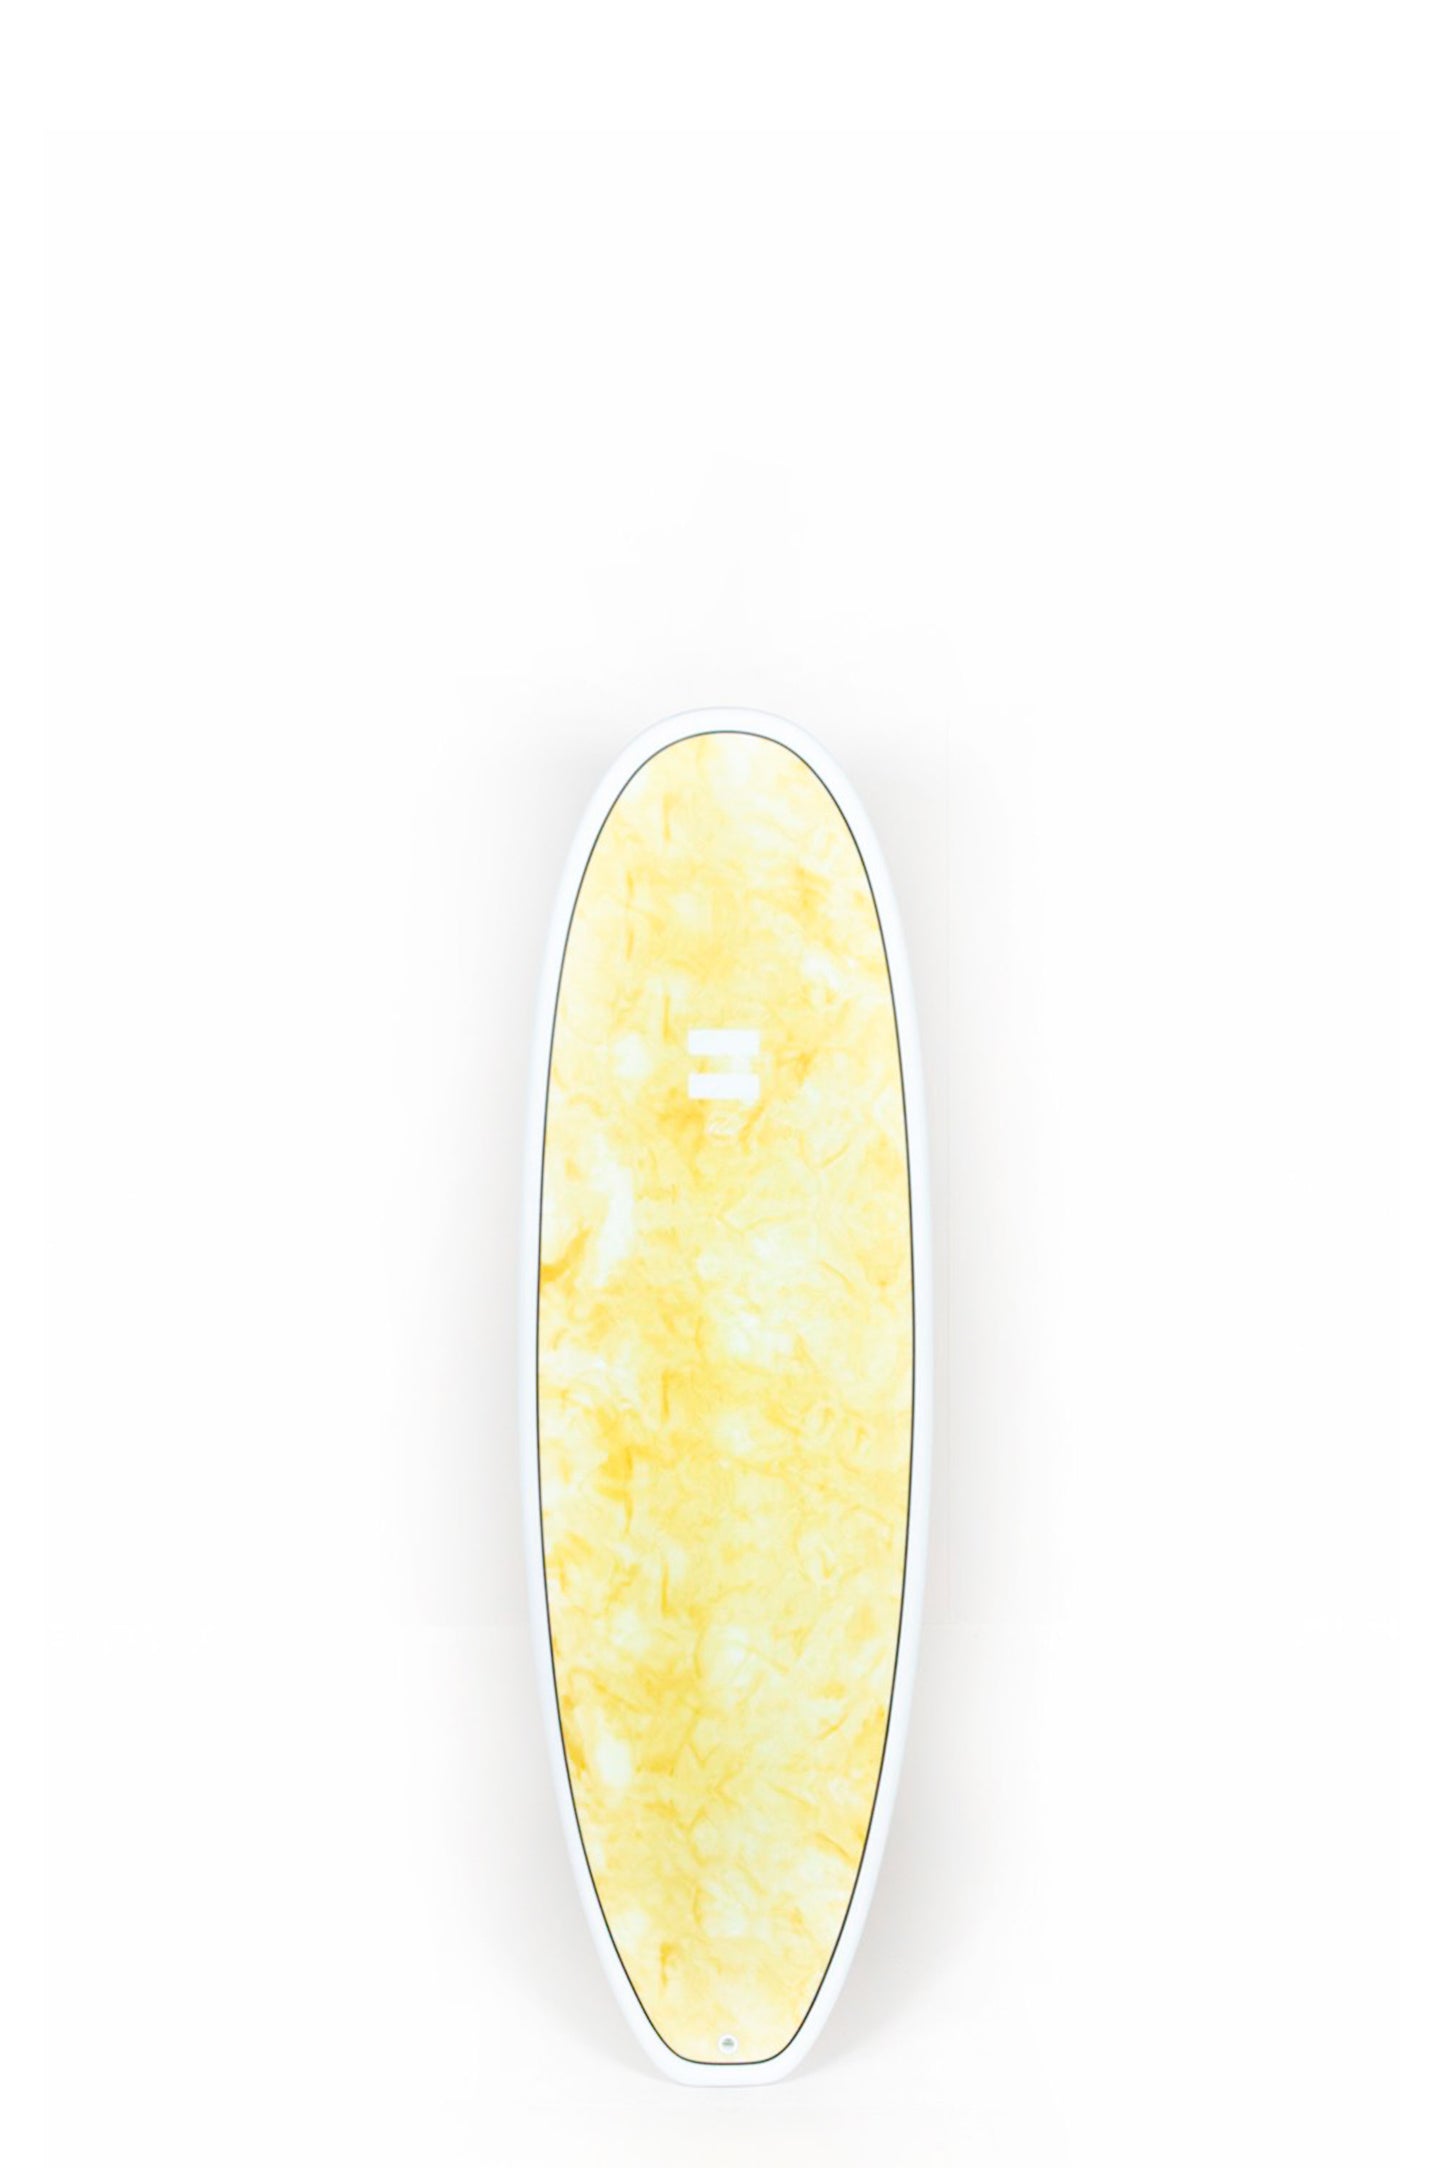 Pukas Surf Shop - Indio Endurance - PLUS Swirl Effect Yellow - 6´6" x 23 x 3 3/8 - 60L